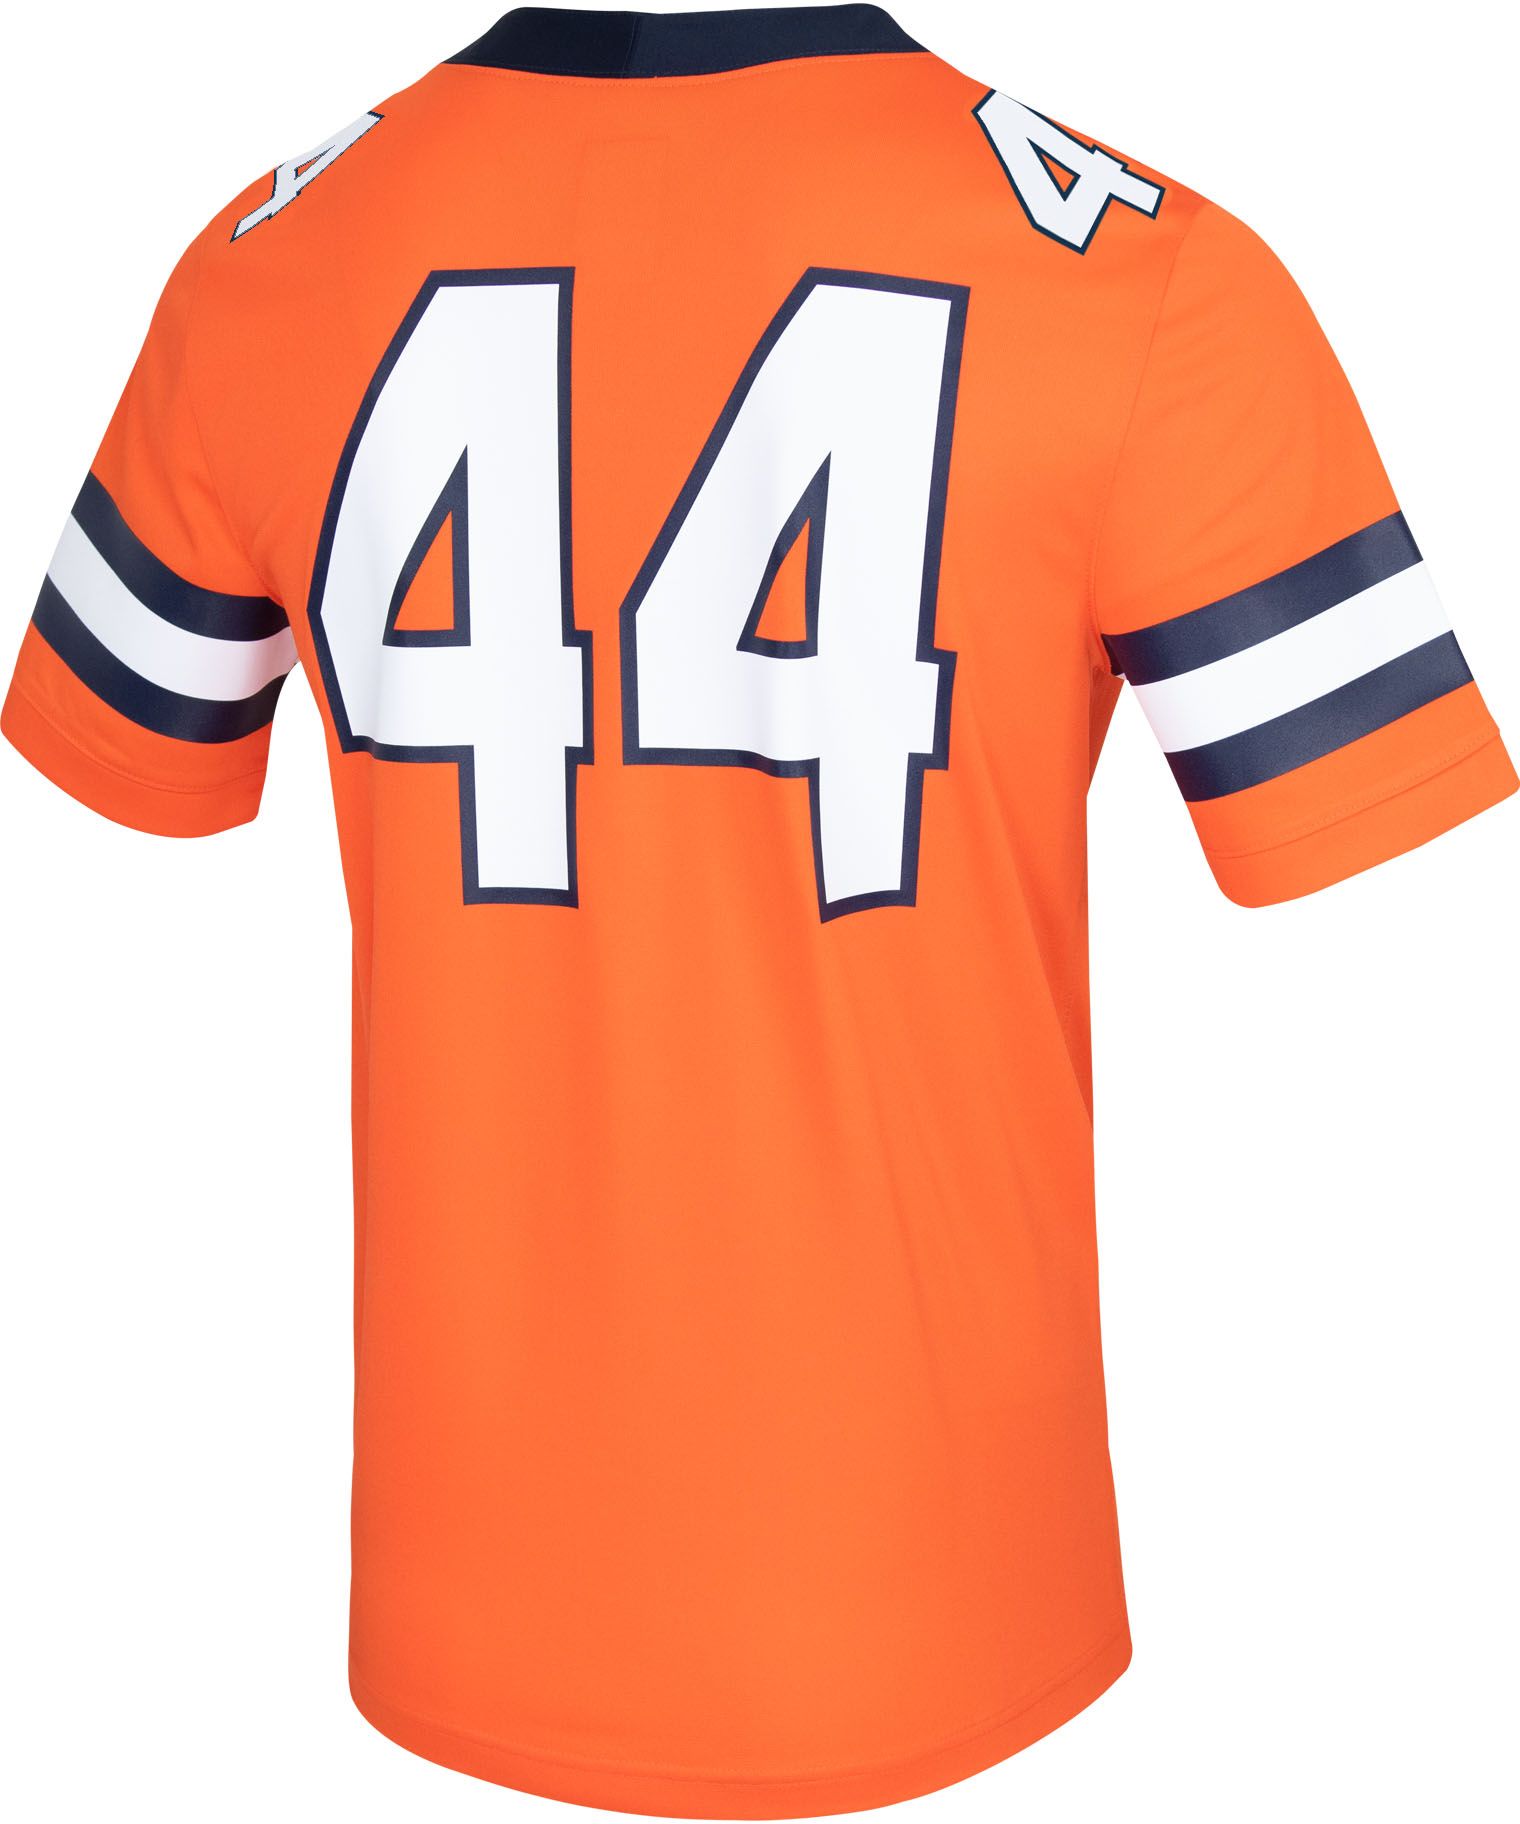 Syracuse Orange game day jersey